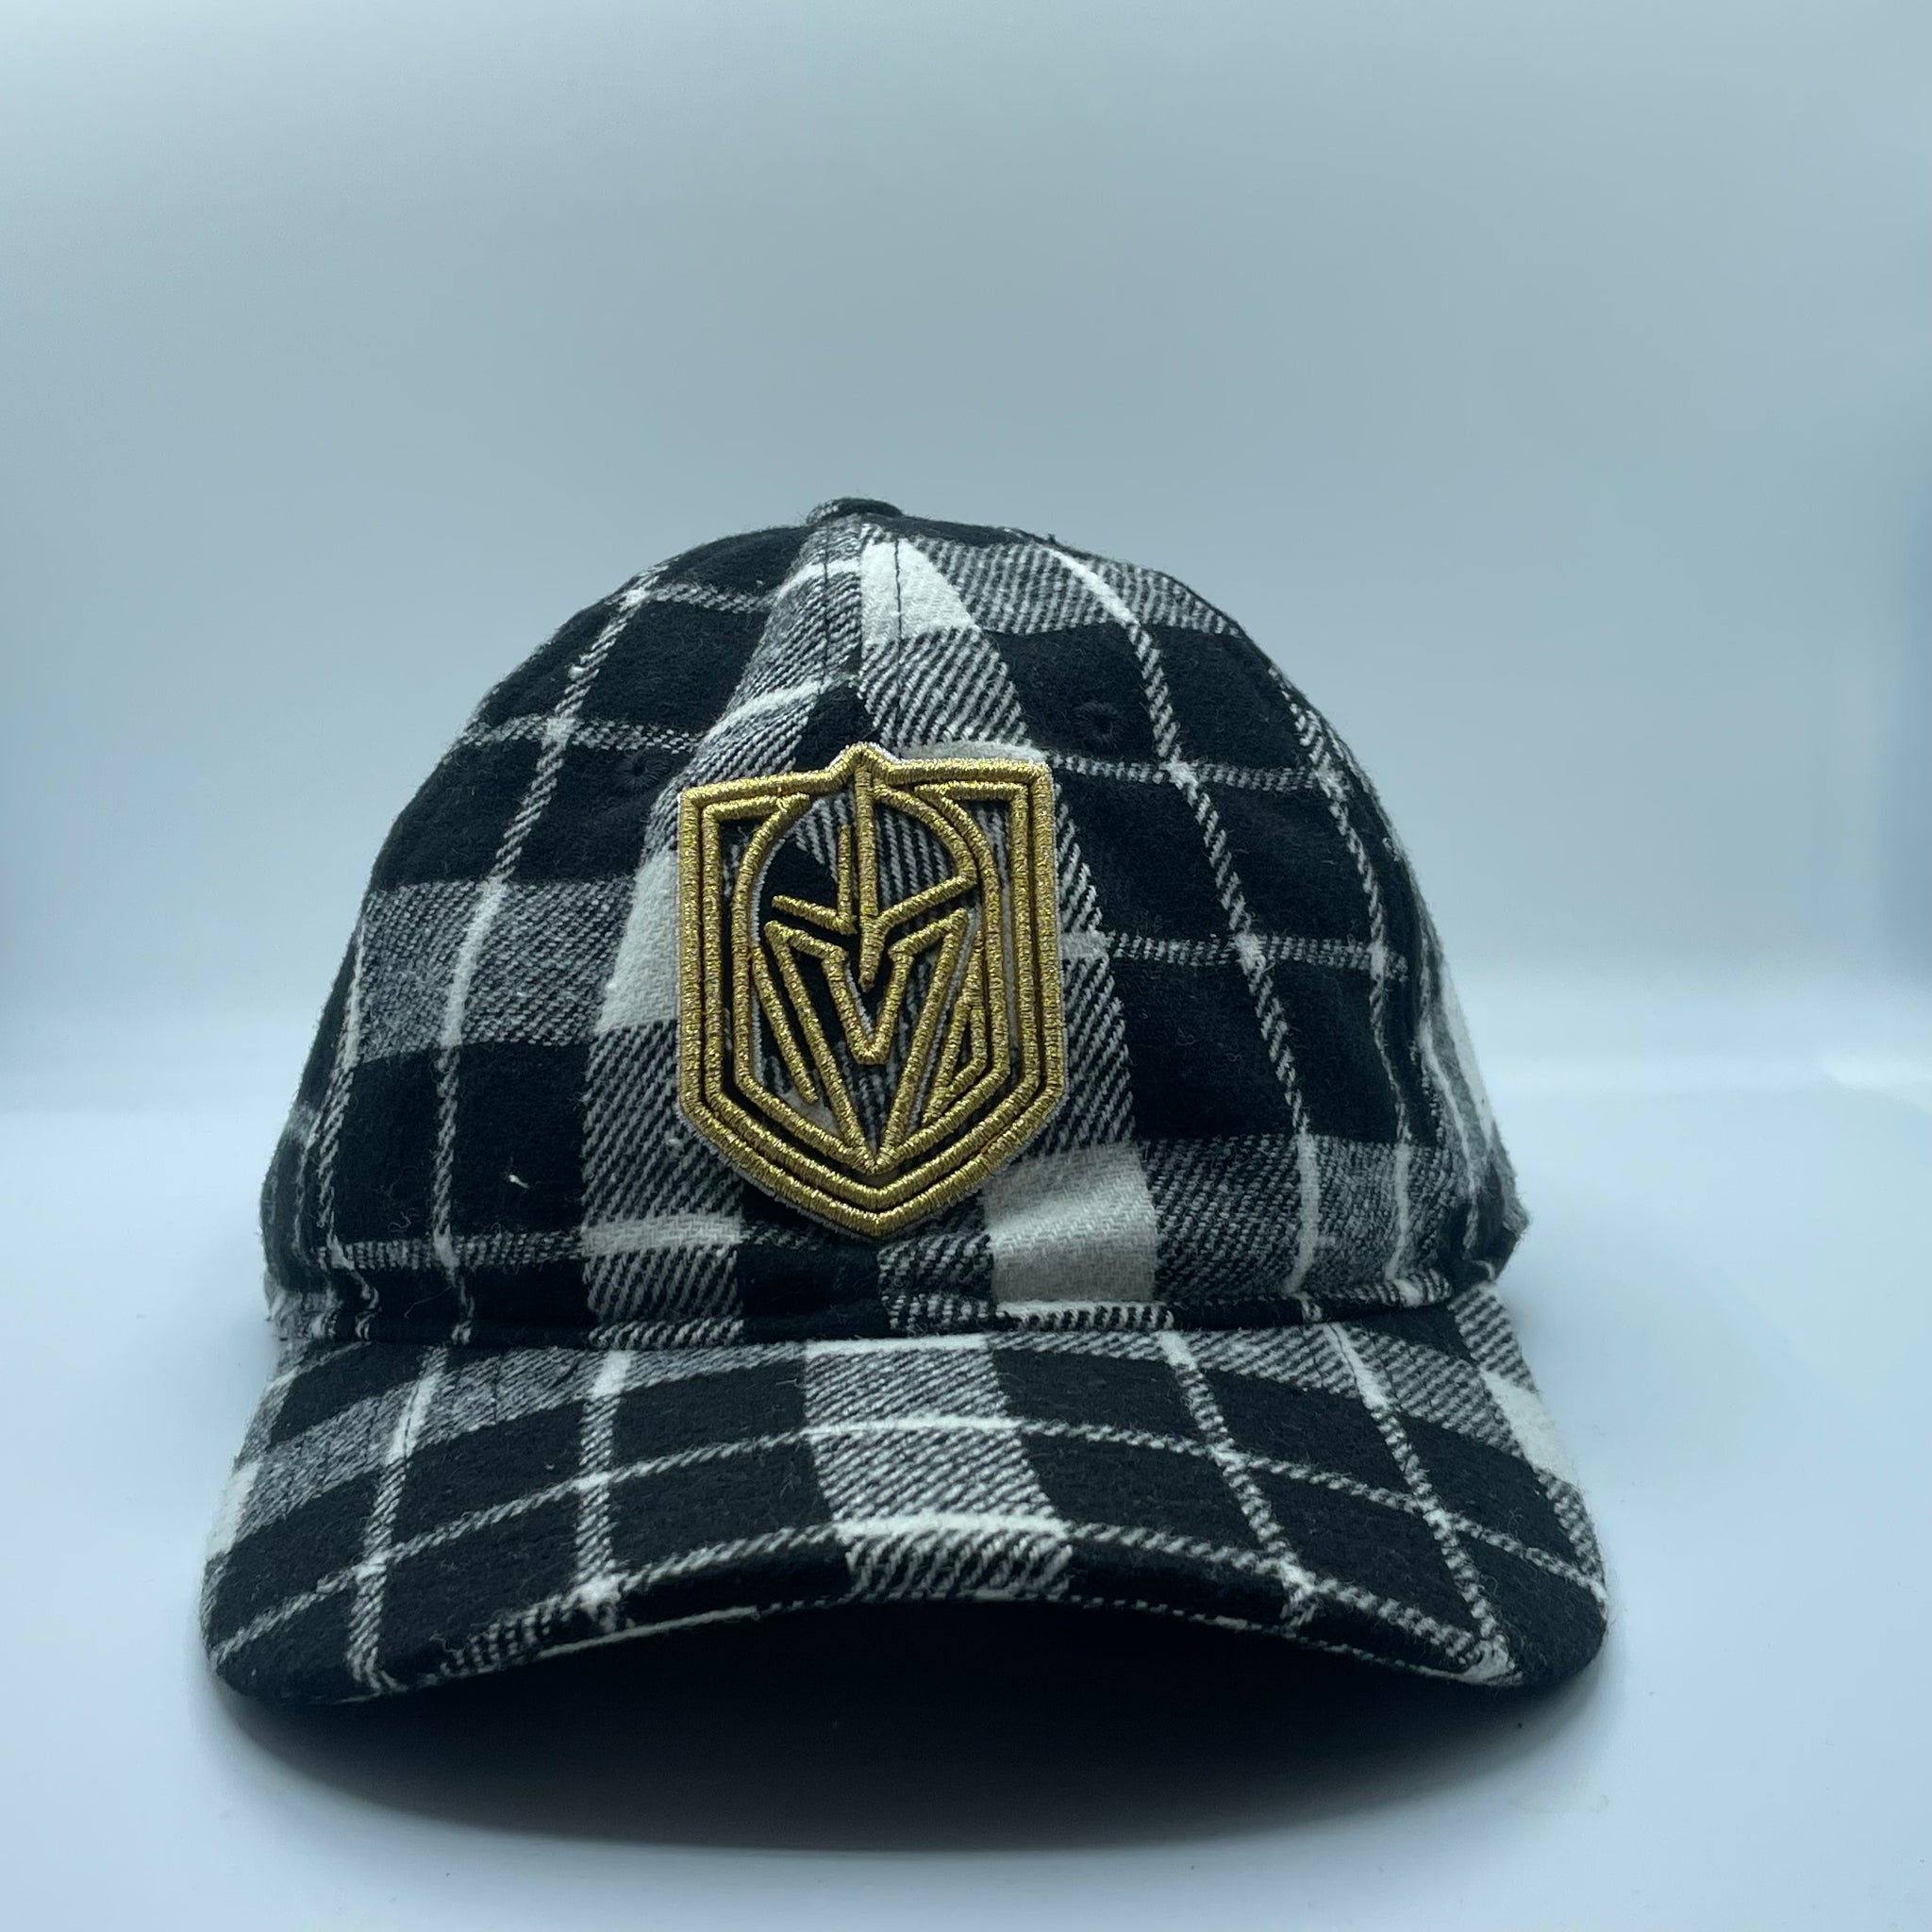 Vegas Golden Knights Winter Flannel Adjustable Hat - Black/White